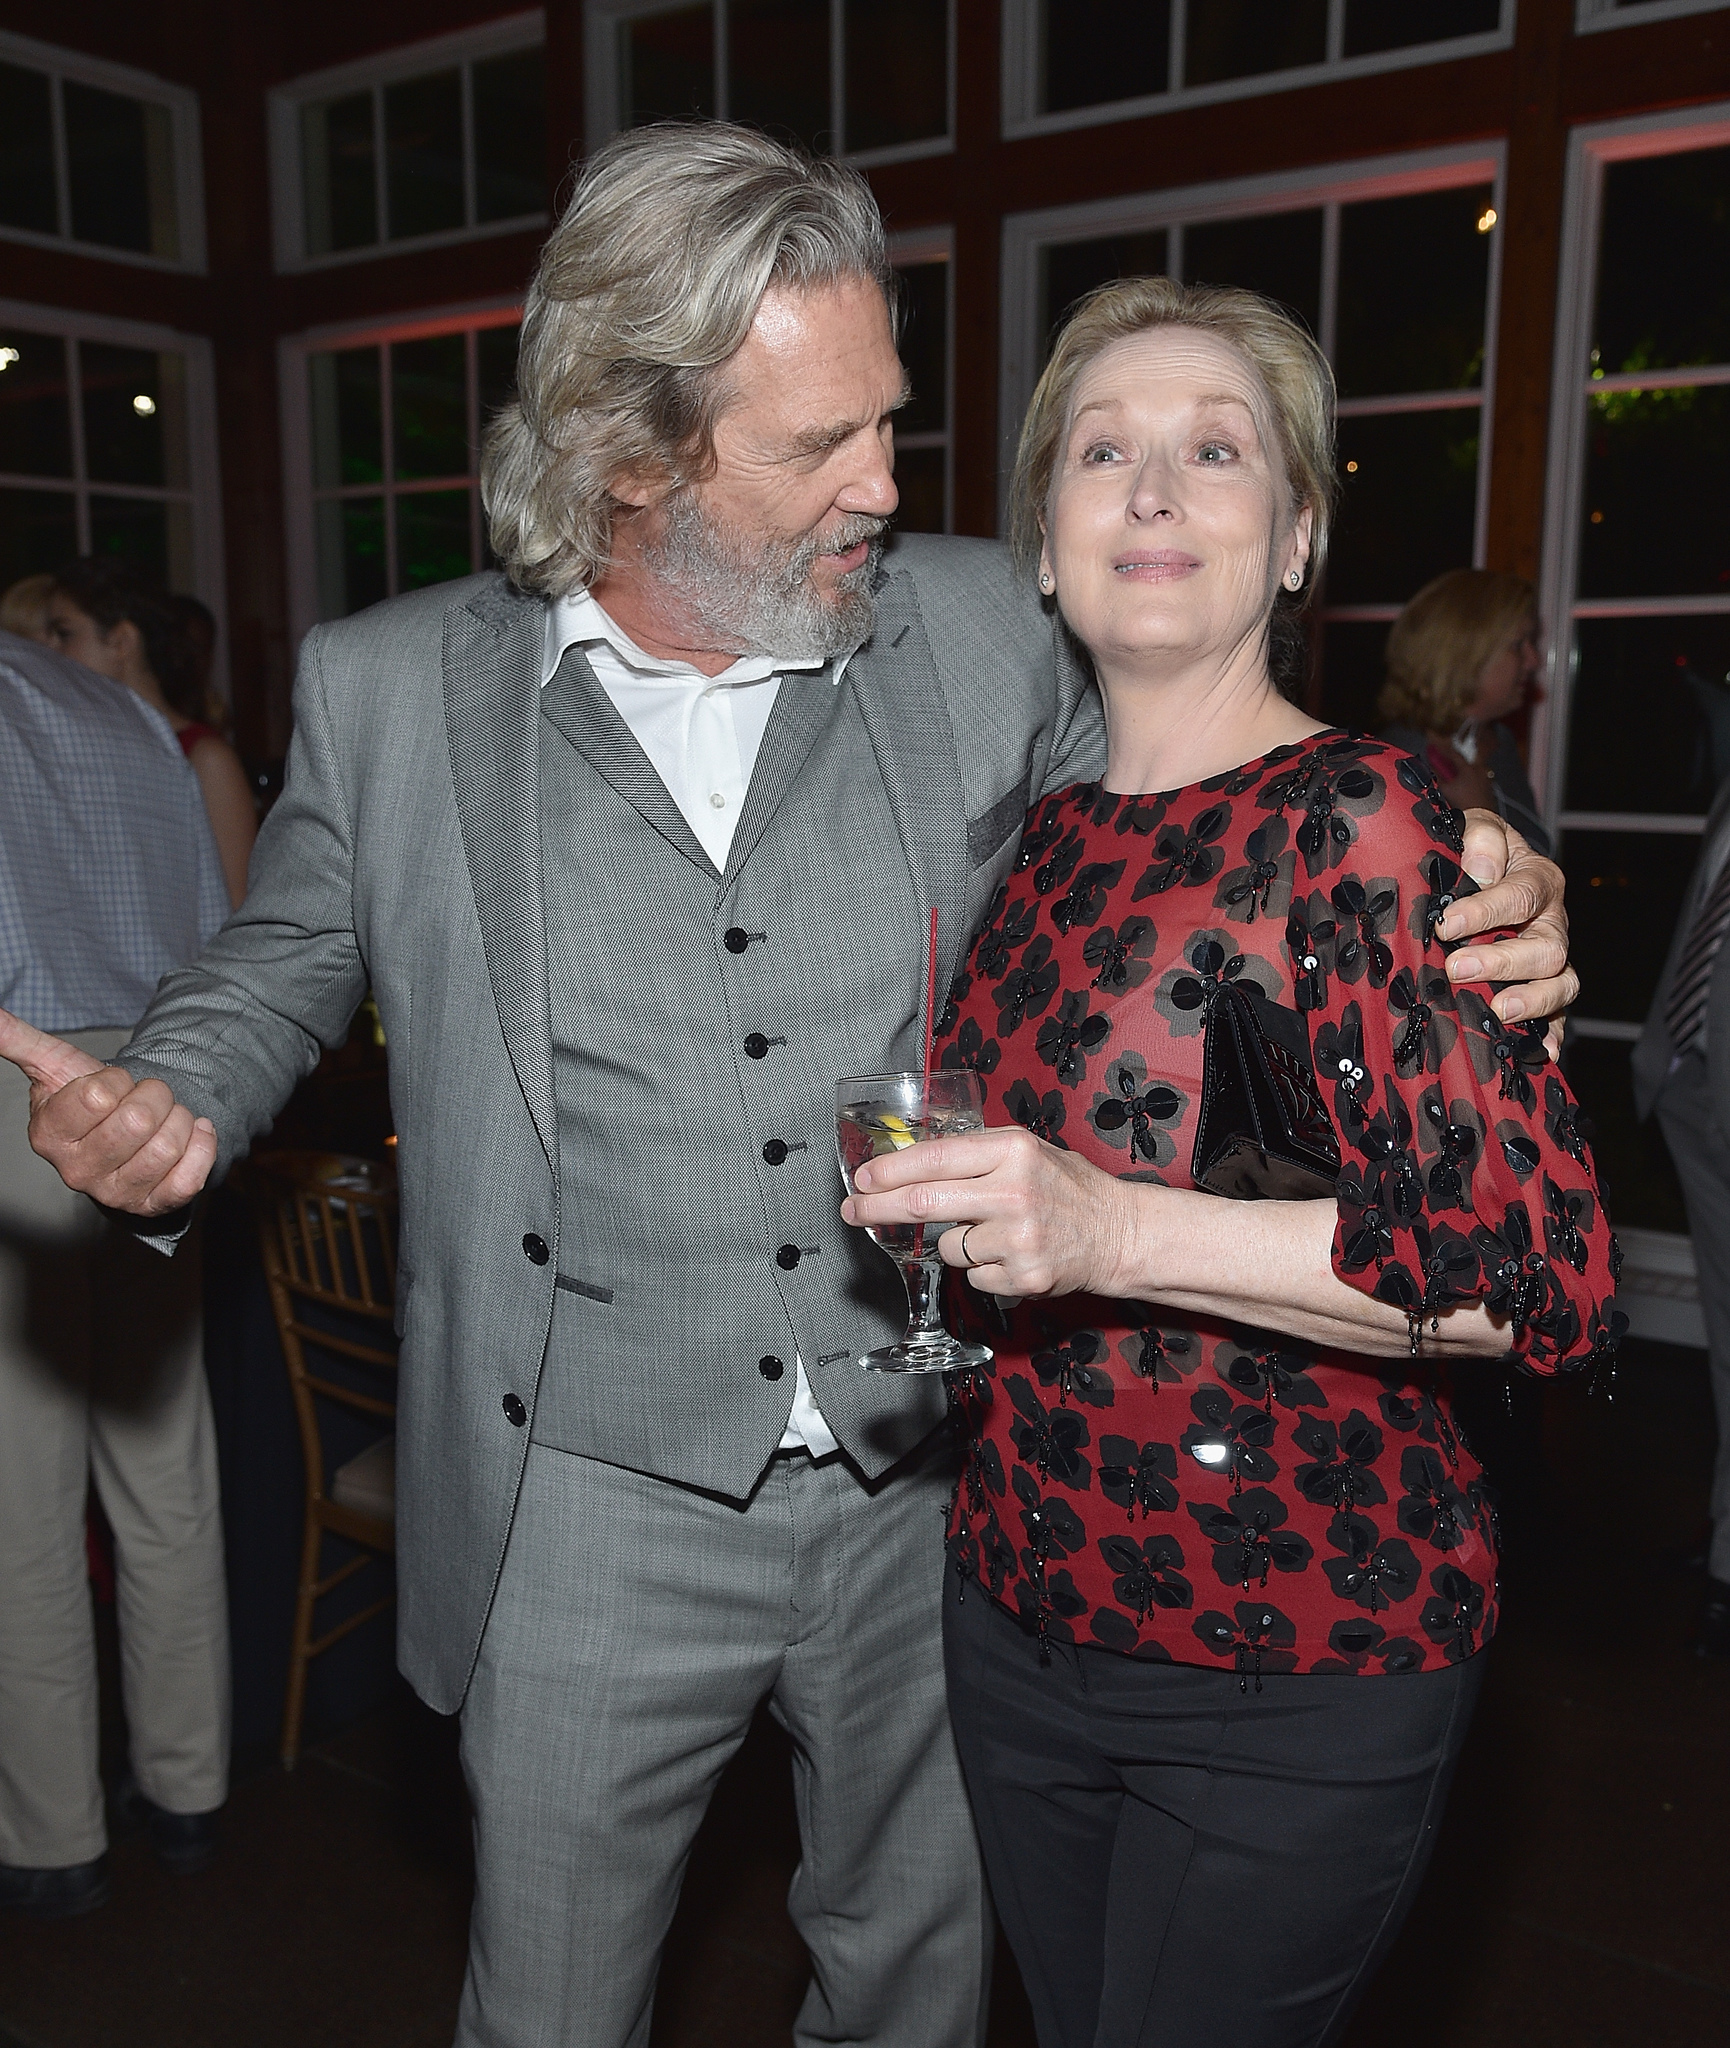 Jeff Bridges and Meryl Streep at event of Siuntejas (2014)